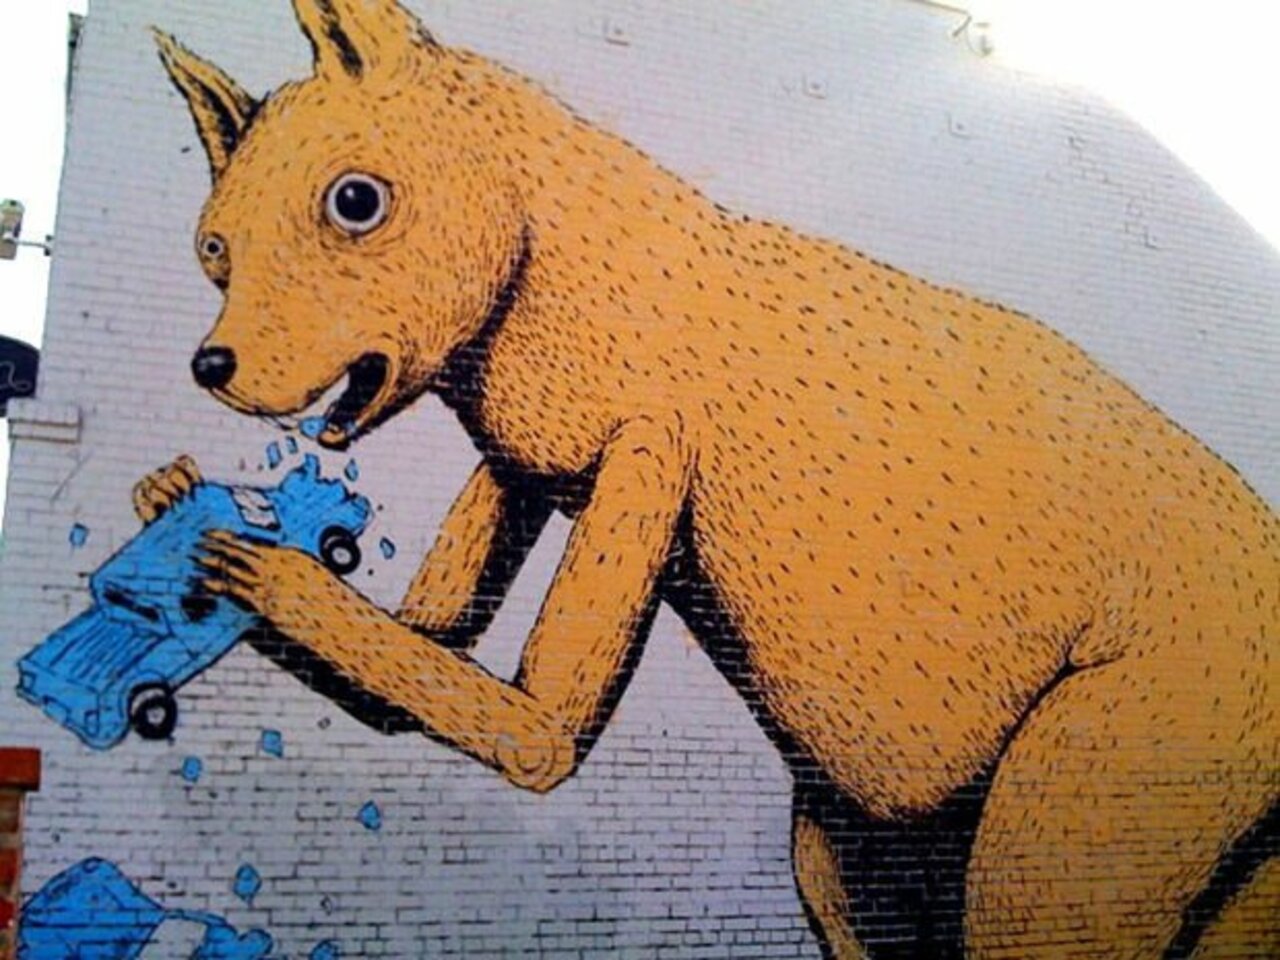 New street art by Ericailcane Italy#streetart #mural #graffiti #art https://t.co/RmgprfWEU3